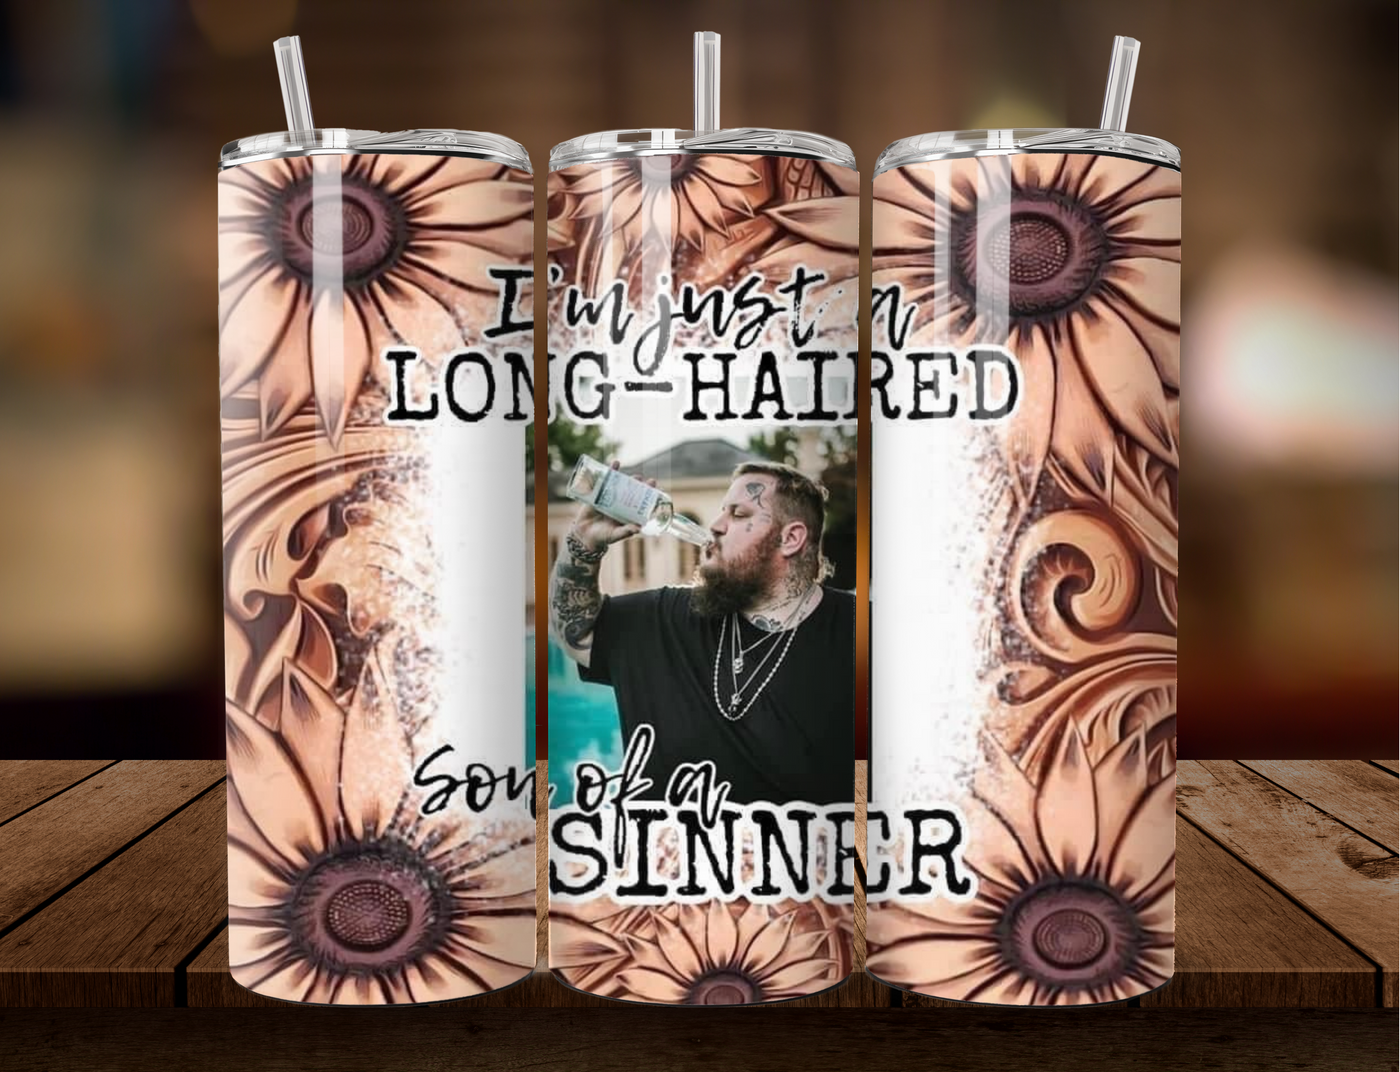 20 OZ Tumbler - Long Haired Son Of A Sinner